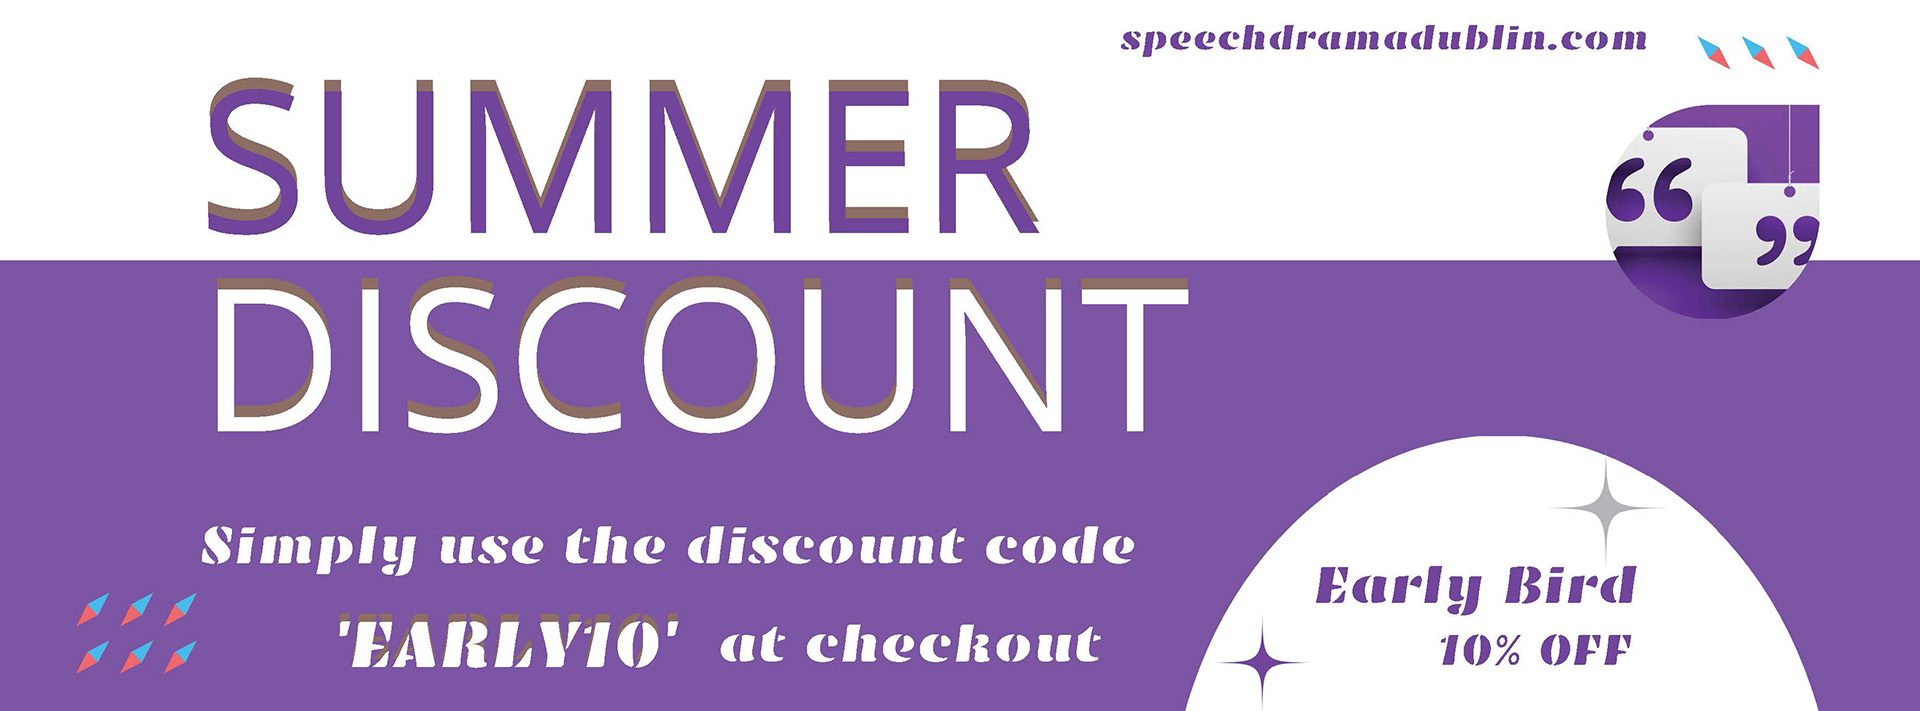 FINAL Facebook Cover Summer Discount-web